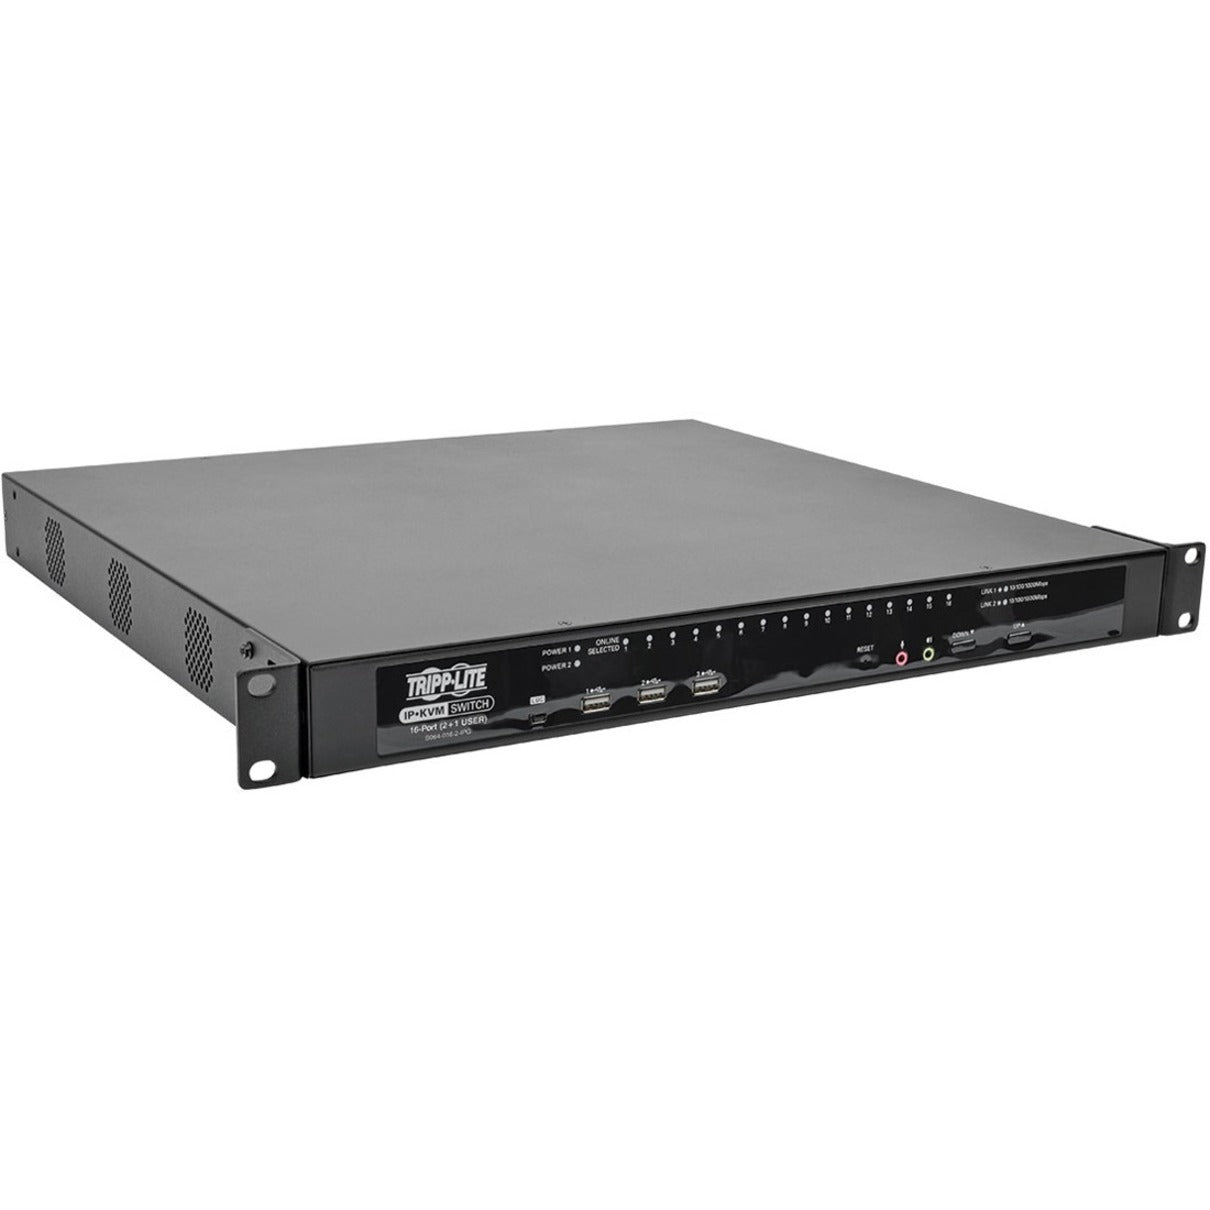 Tripp Lite B064-016-02-IPG NetDirector KVM スイッチボックス、16 ポート、USB/PS/2、ラックマウント可能 Tripp Lite - トリップライト